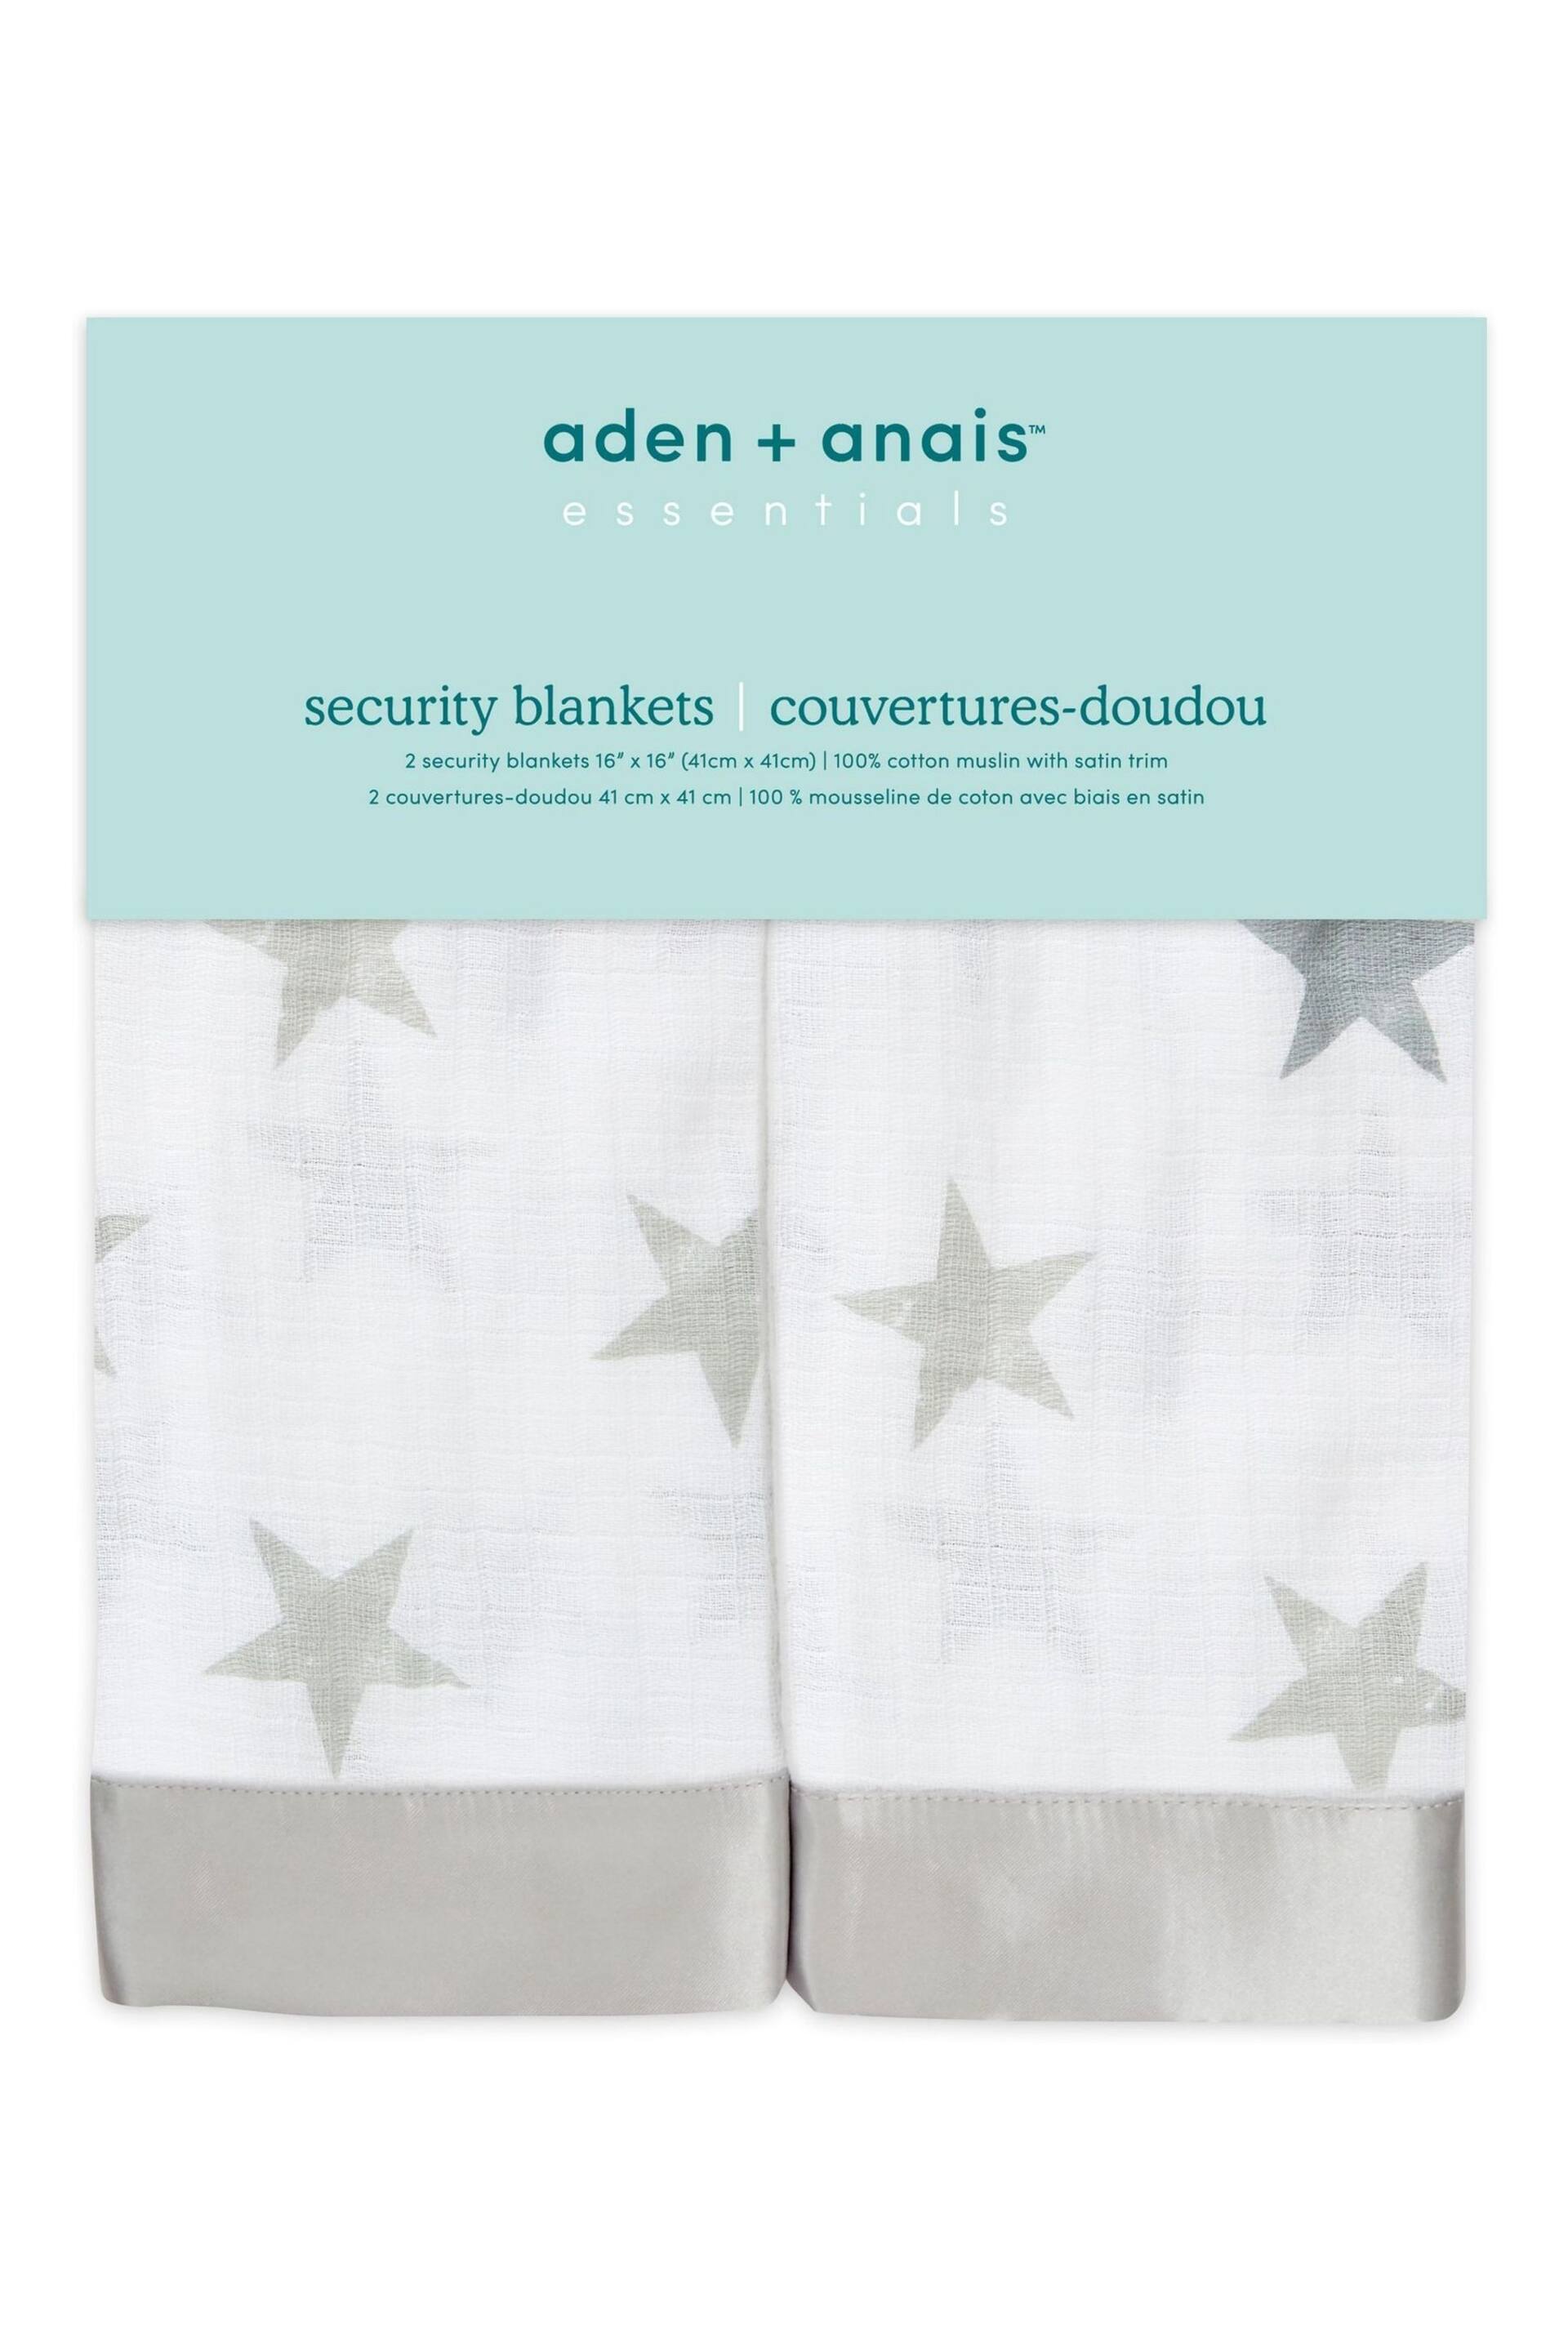 aden + anais Grey essentials Muslin Comforter Security Blankets 2 Pack Grey - Image 2 of 3